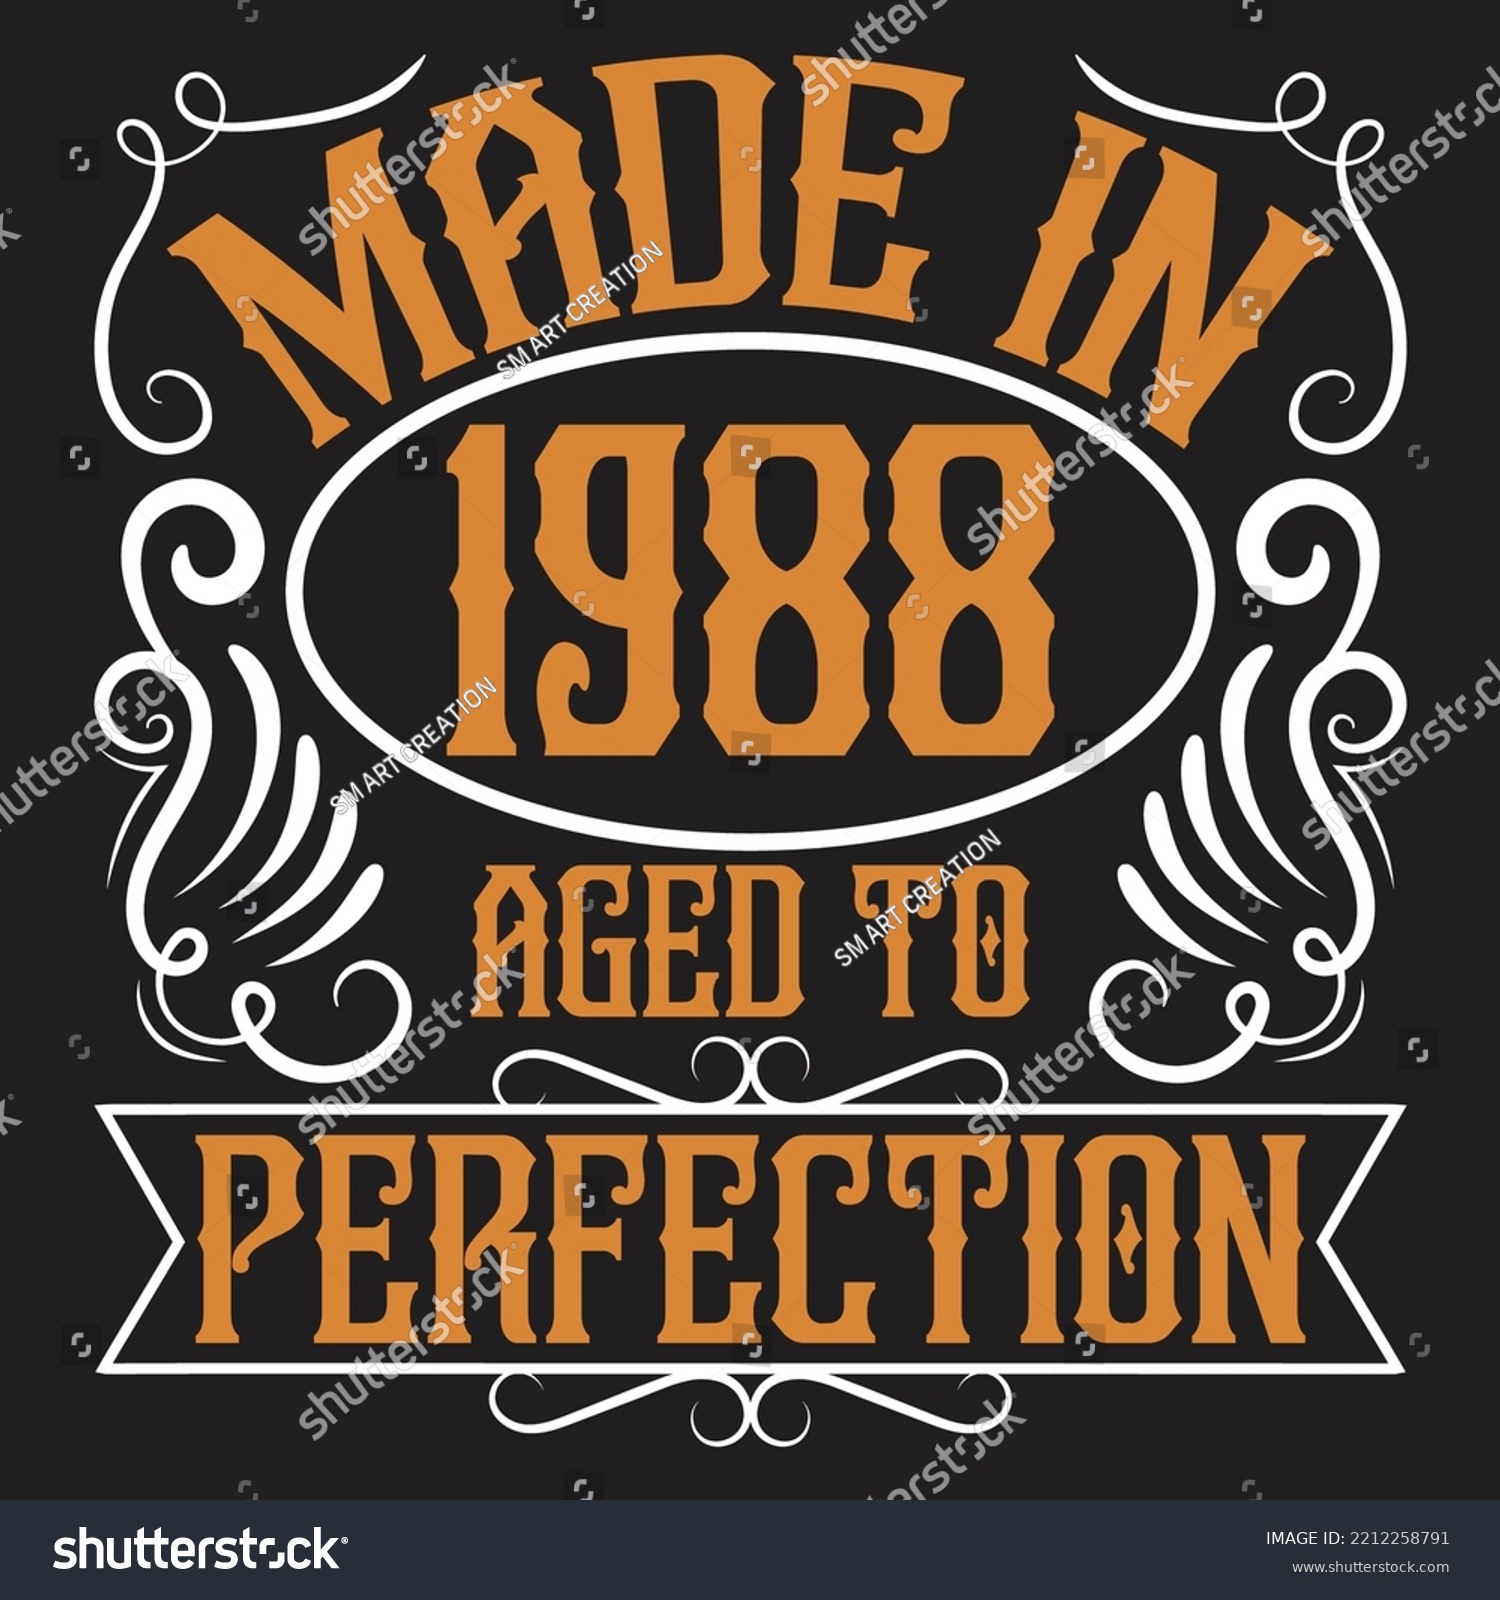 SVG of Vintage Birthday  t shirt design with Birthday elements or Hand drawn Birthday typography design svg